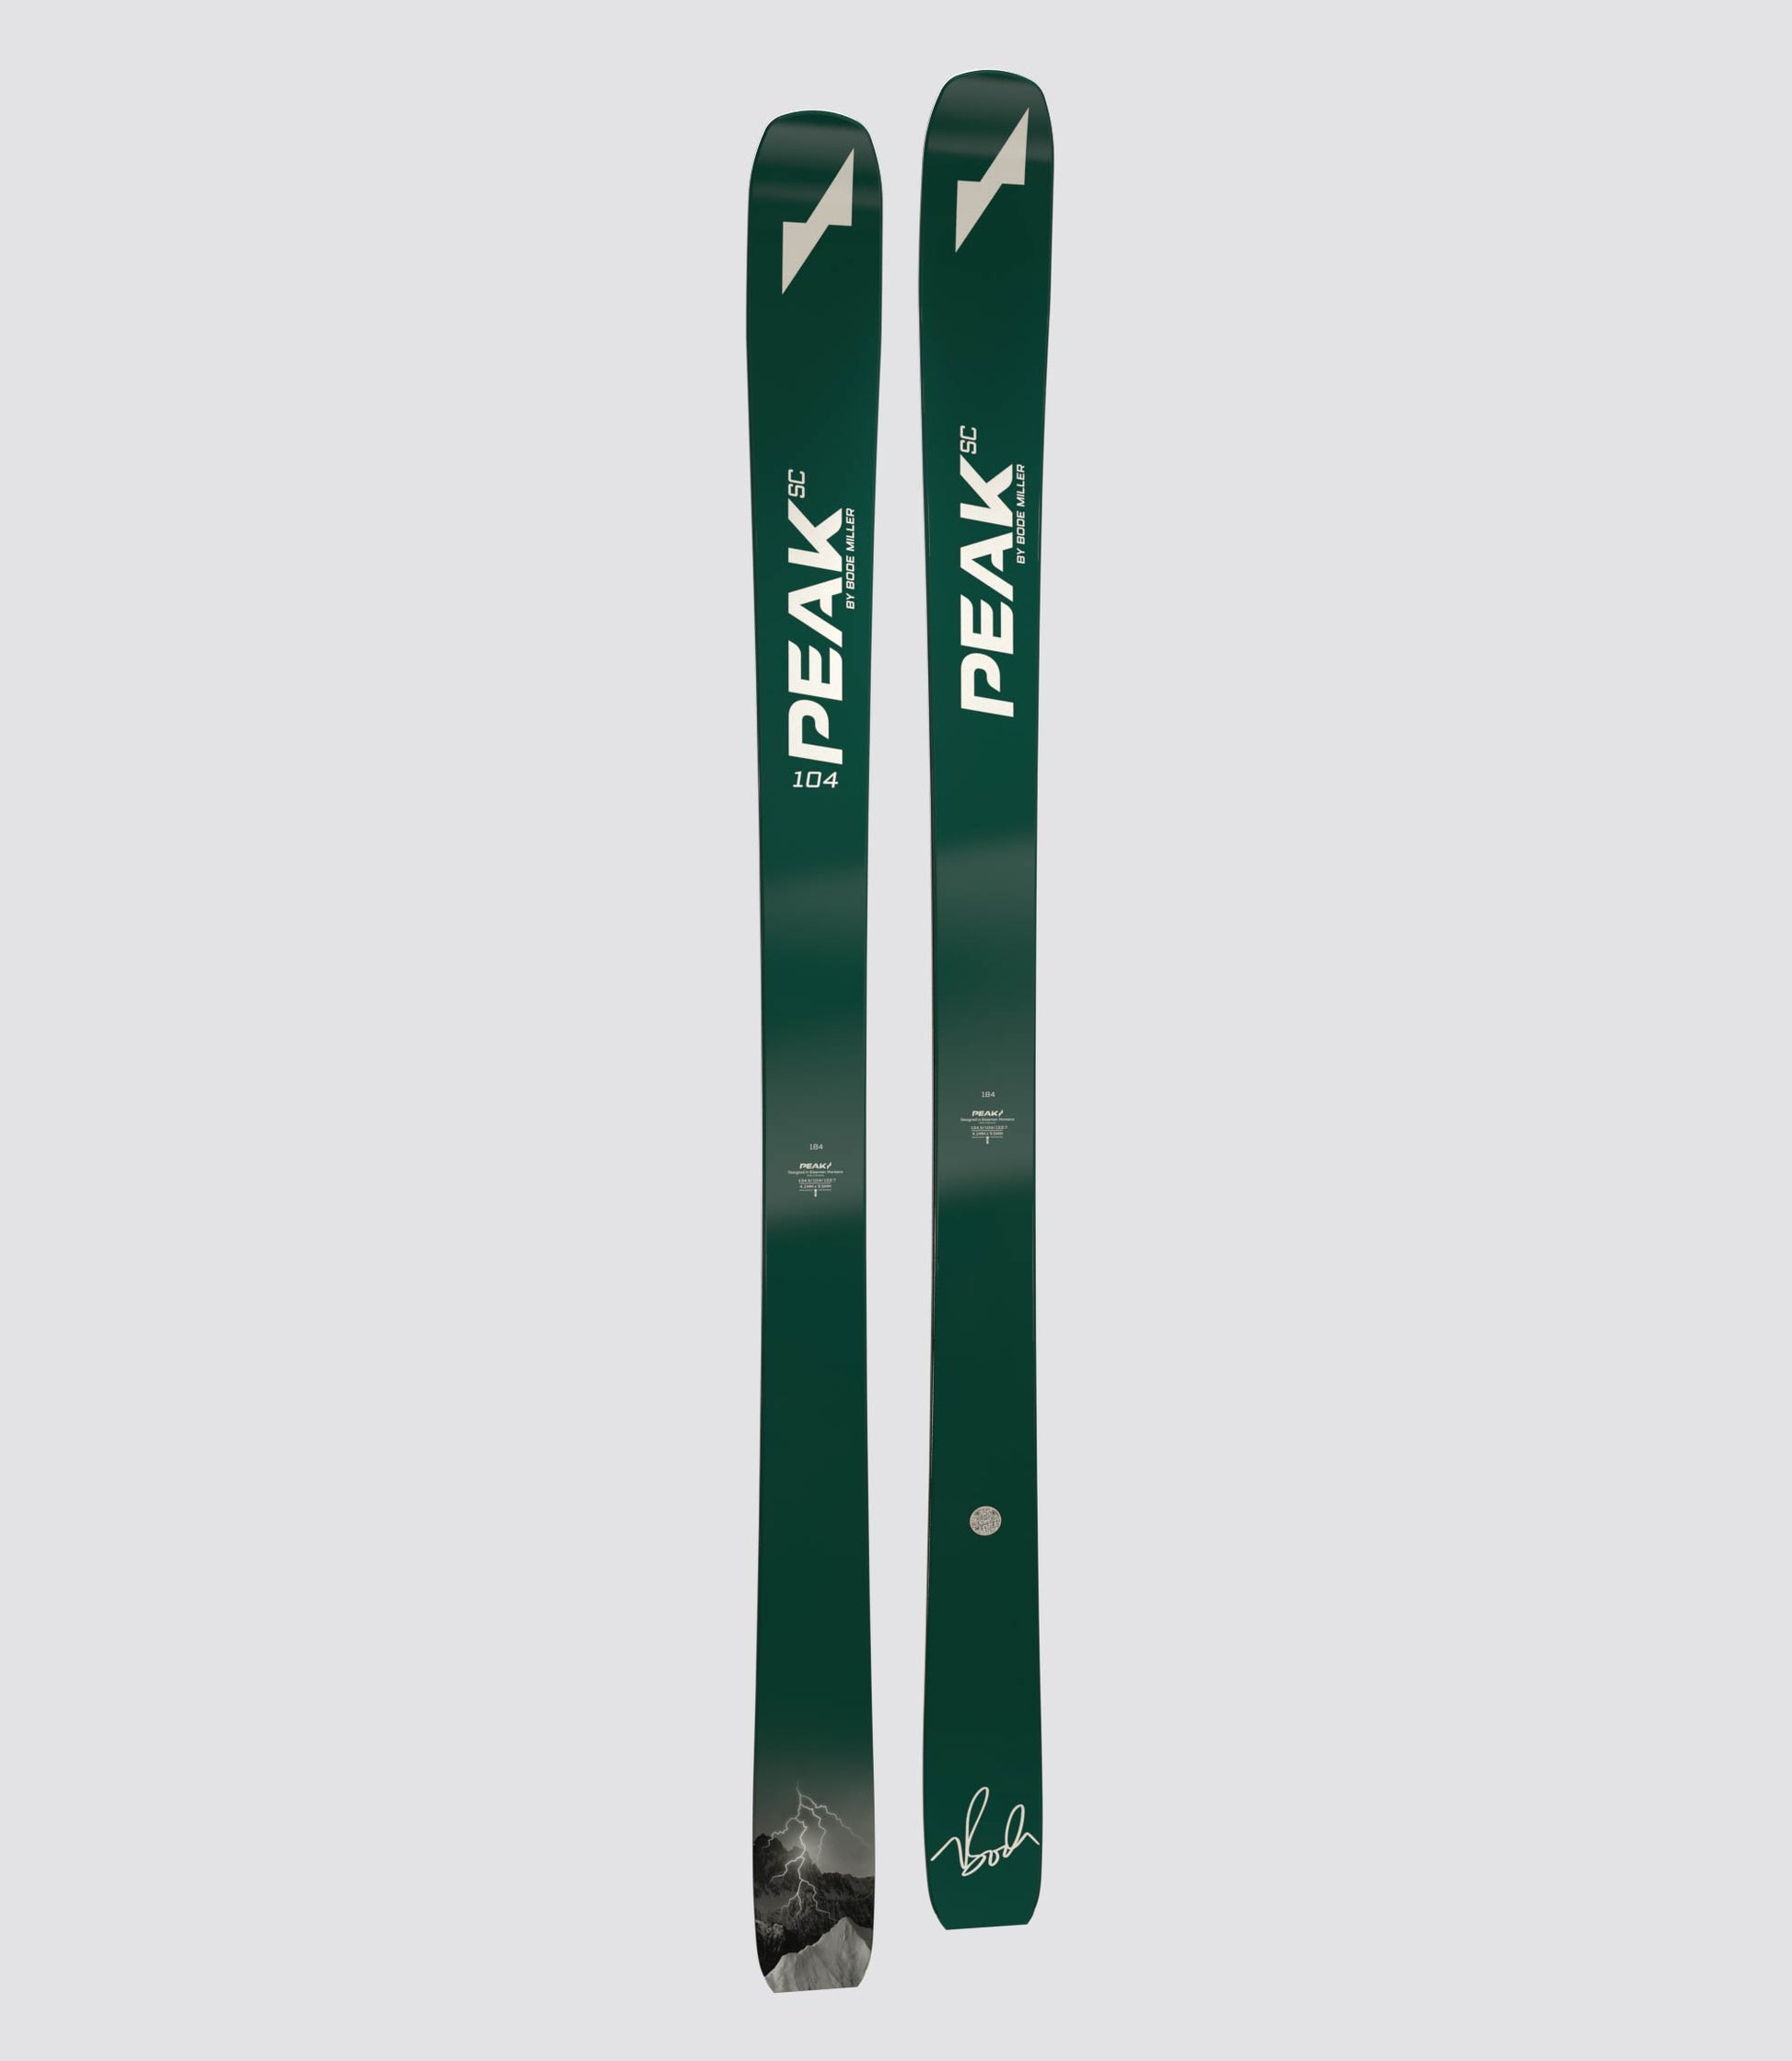 Peak 104SC Skis by Bode Miller